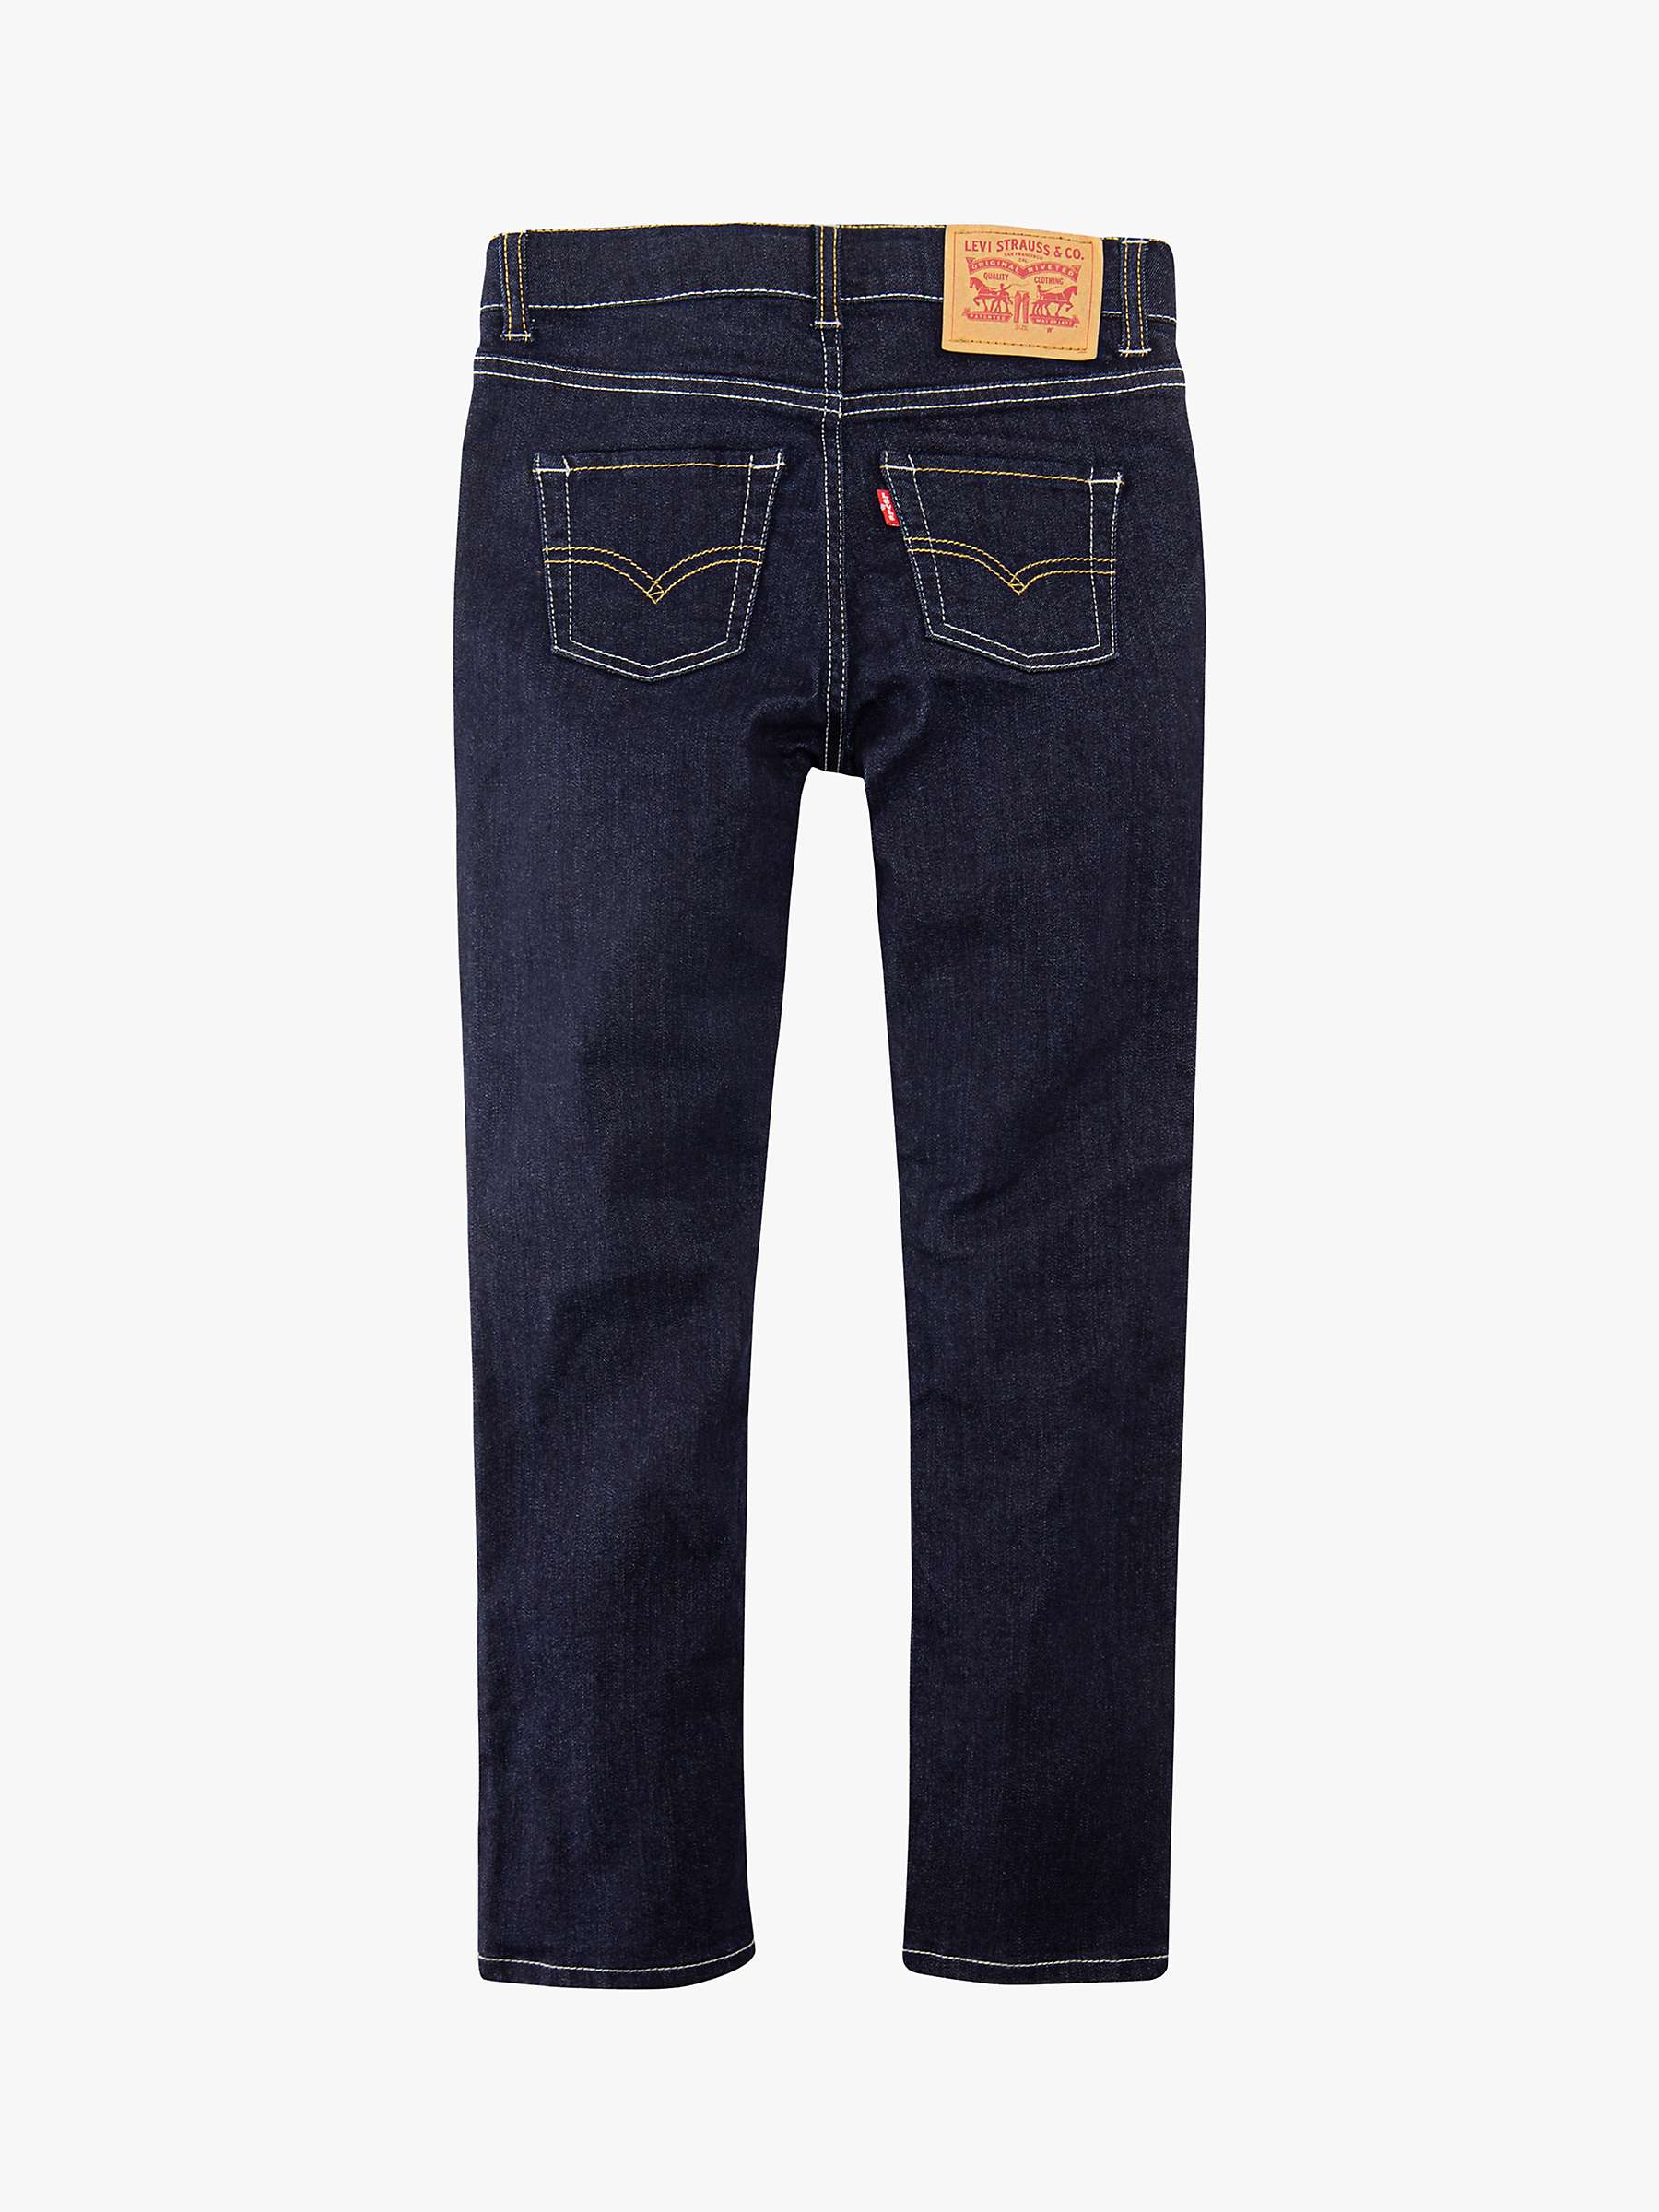 Levi Boys' 510 Skinny Fit Jeans, Dark Blue at John Lewis & Partners